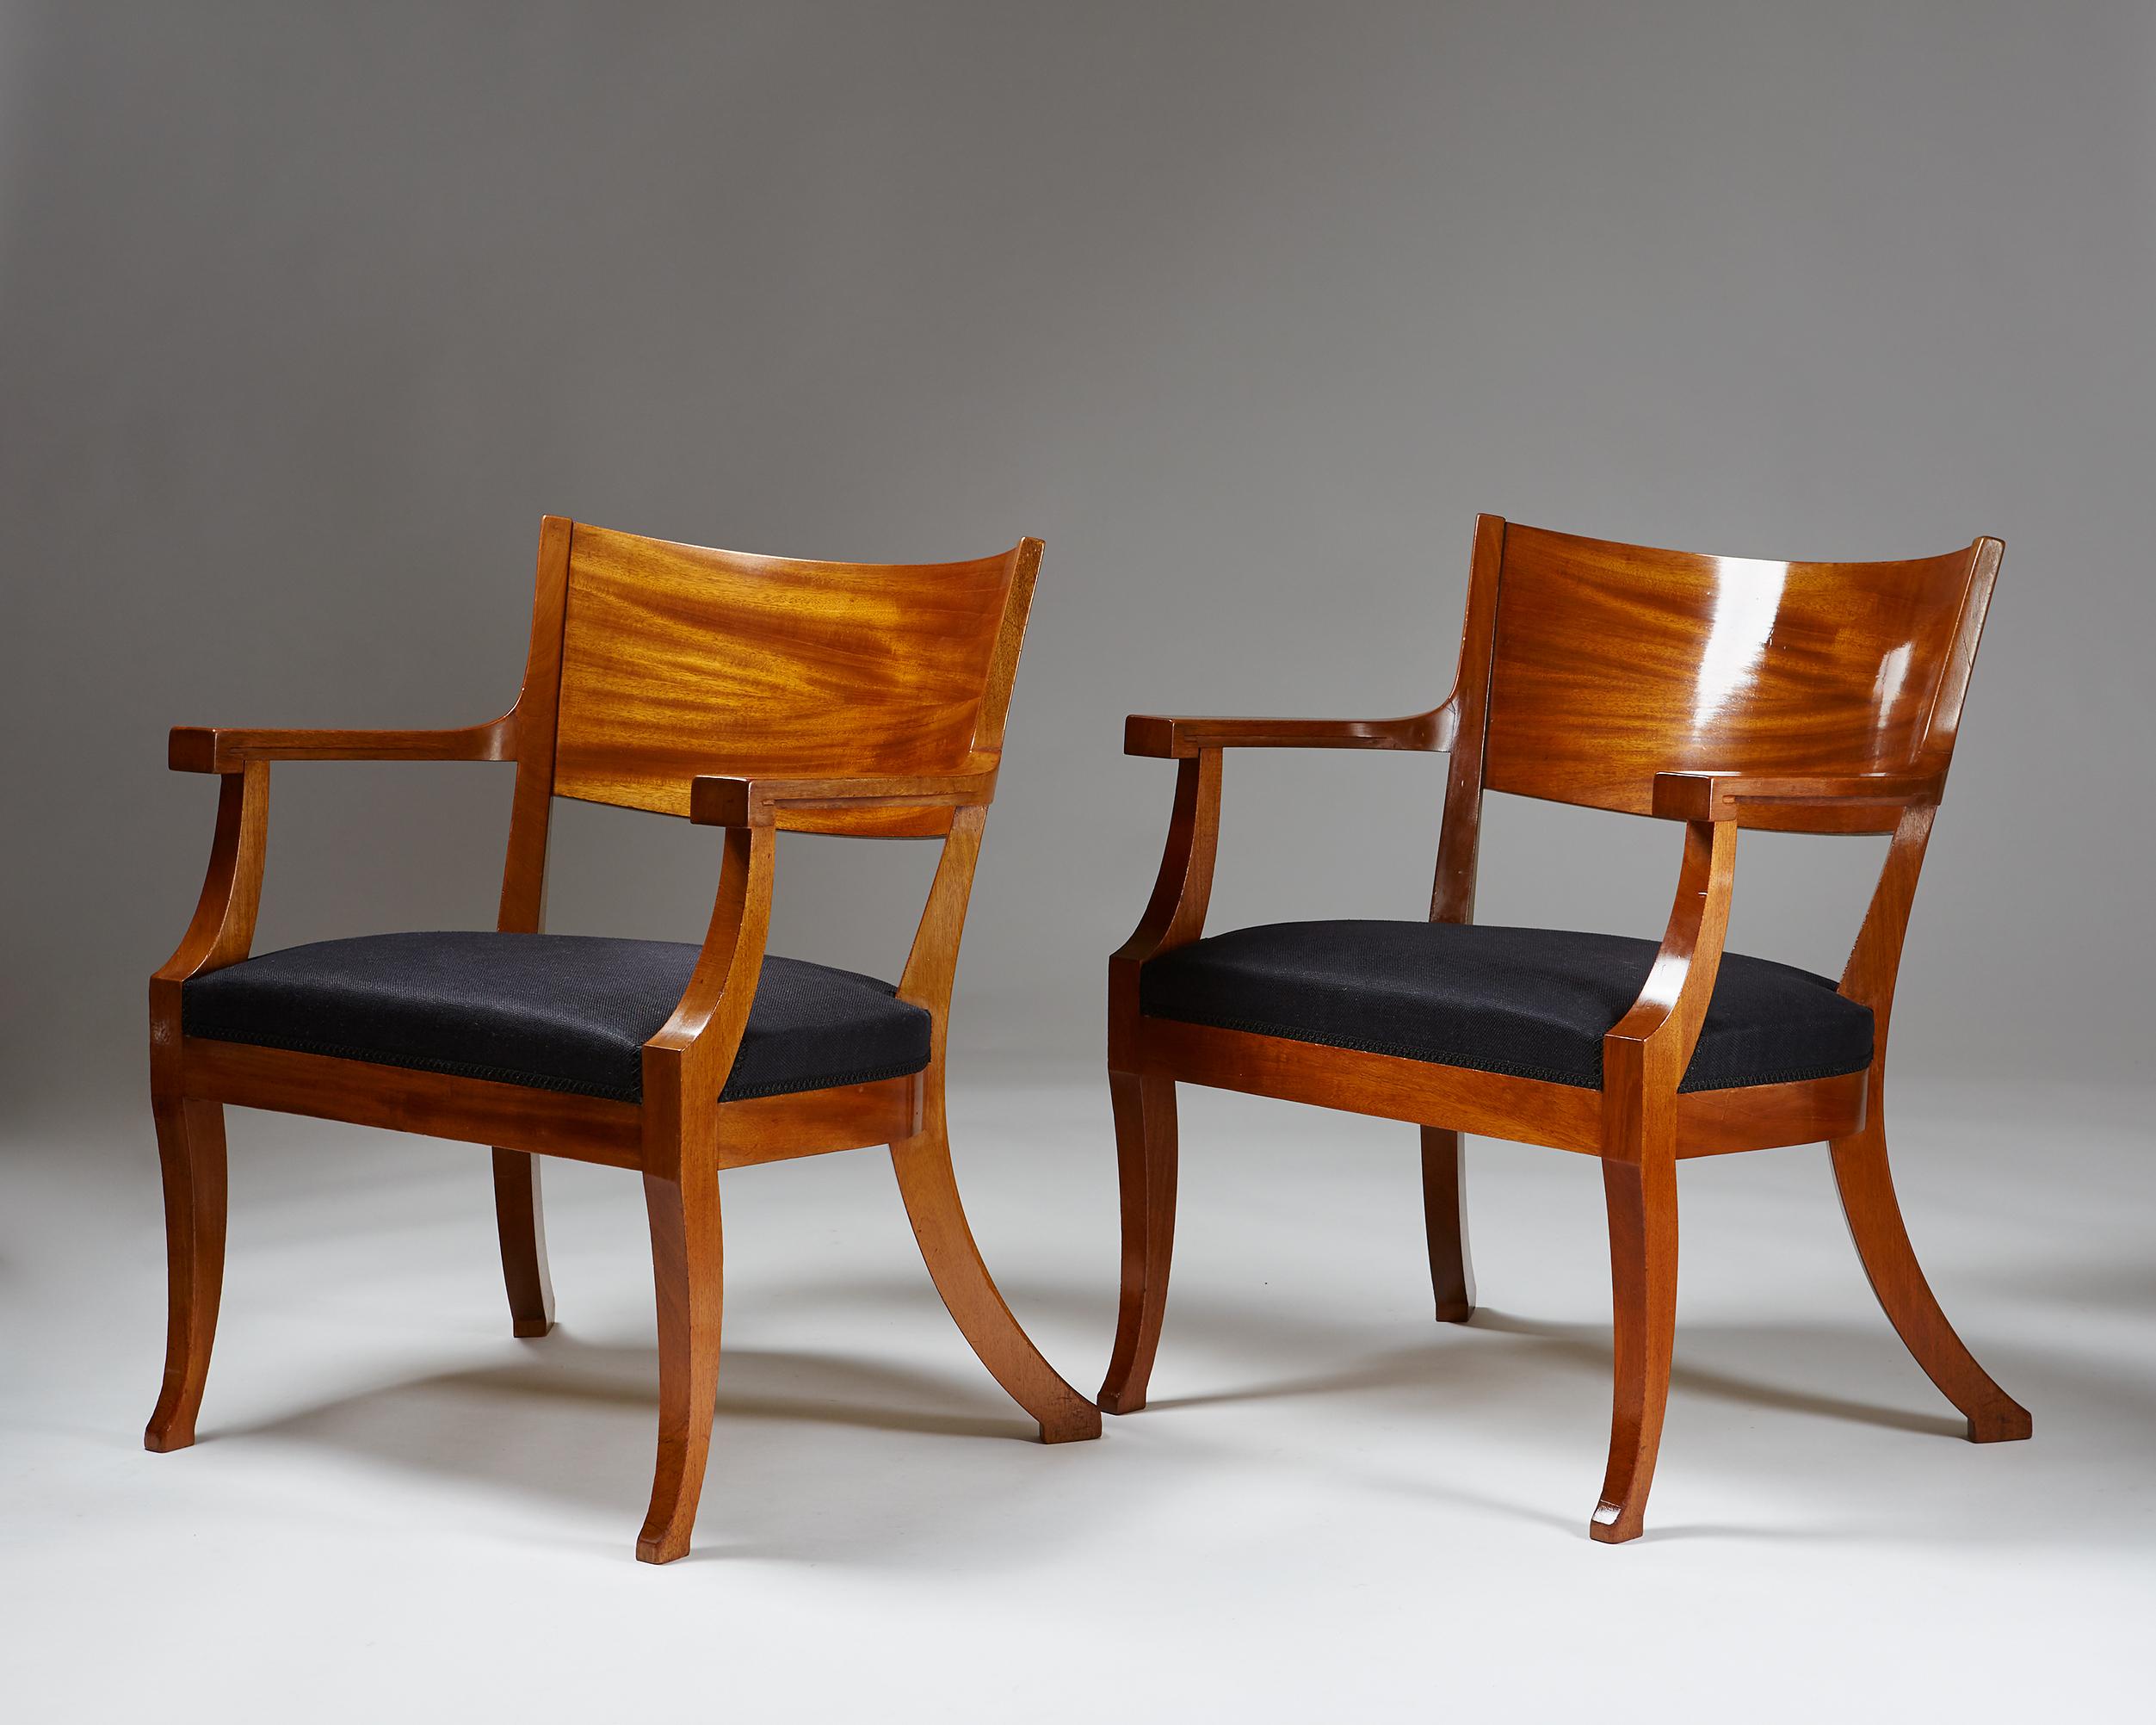 Solid mahogany and linen upholstery.

Measures: H 86 cm/ 2' 10''
W 72 cm/ 2' 5''
D 62 cm/ 2' 1''
SH 46 cm/ 18''

Sold as a pair.

Provenance: Uppsala Castle, Sweden.